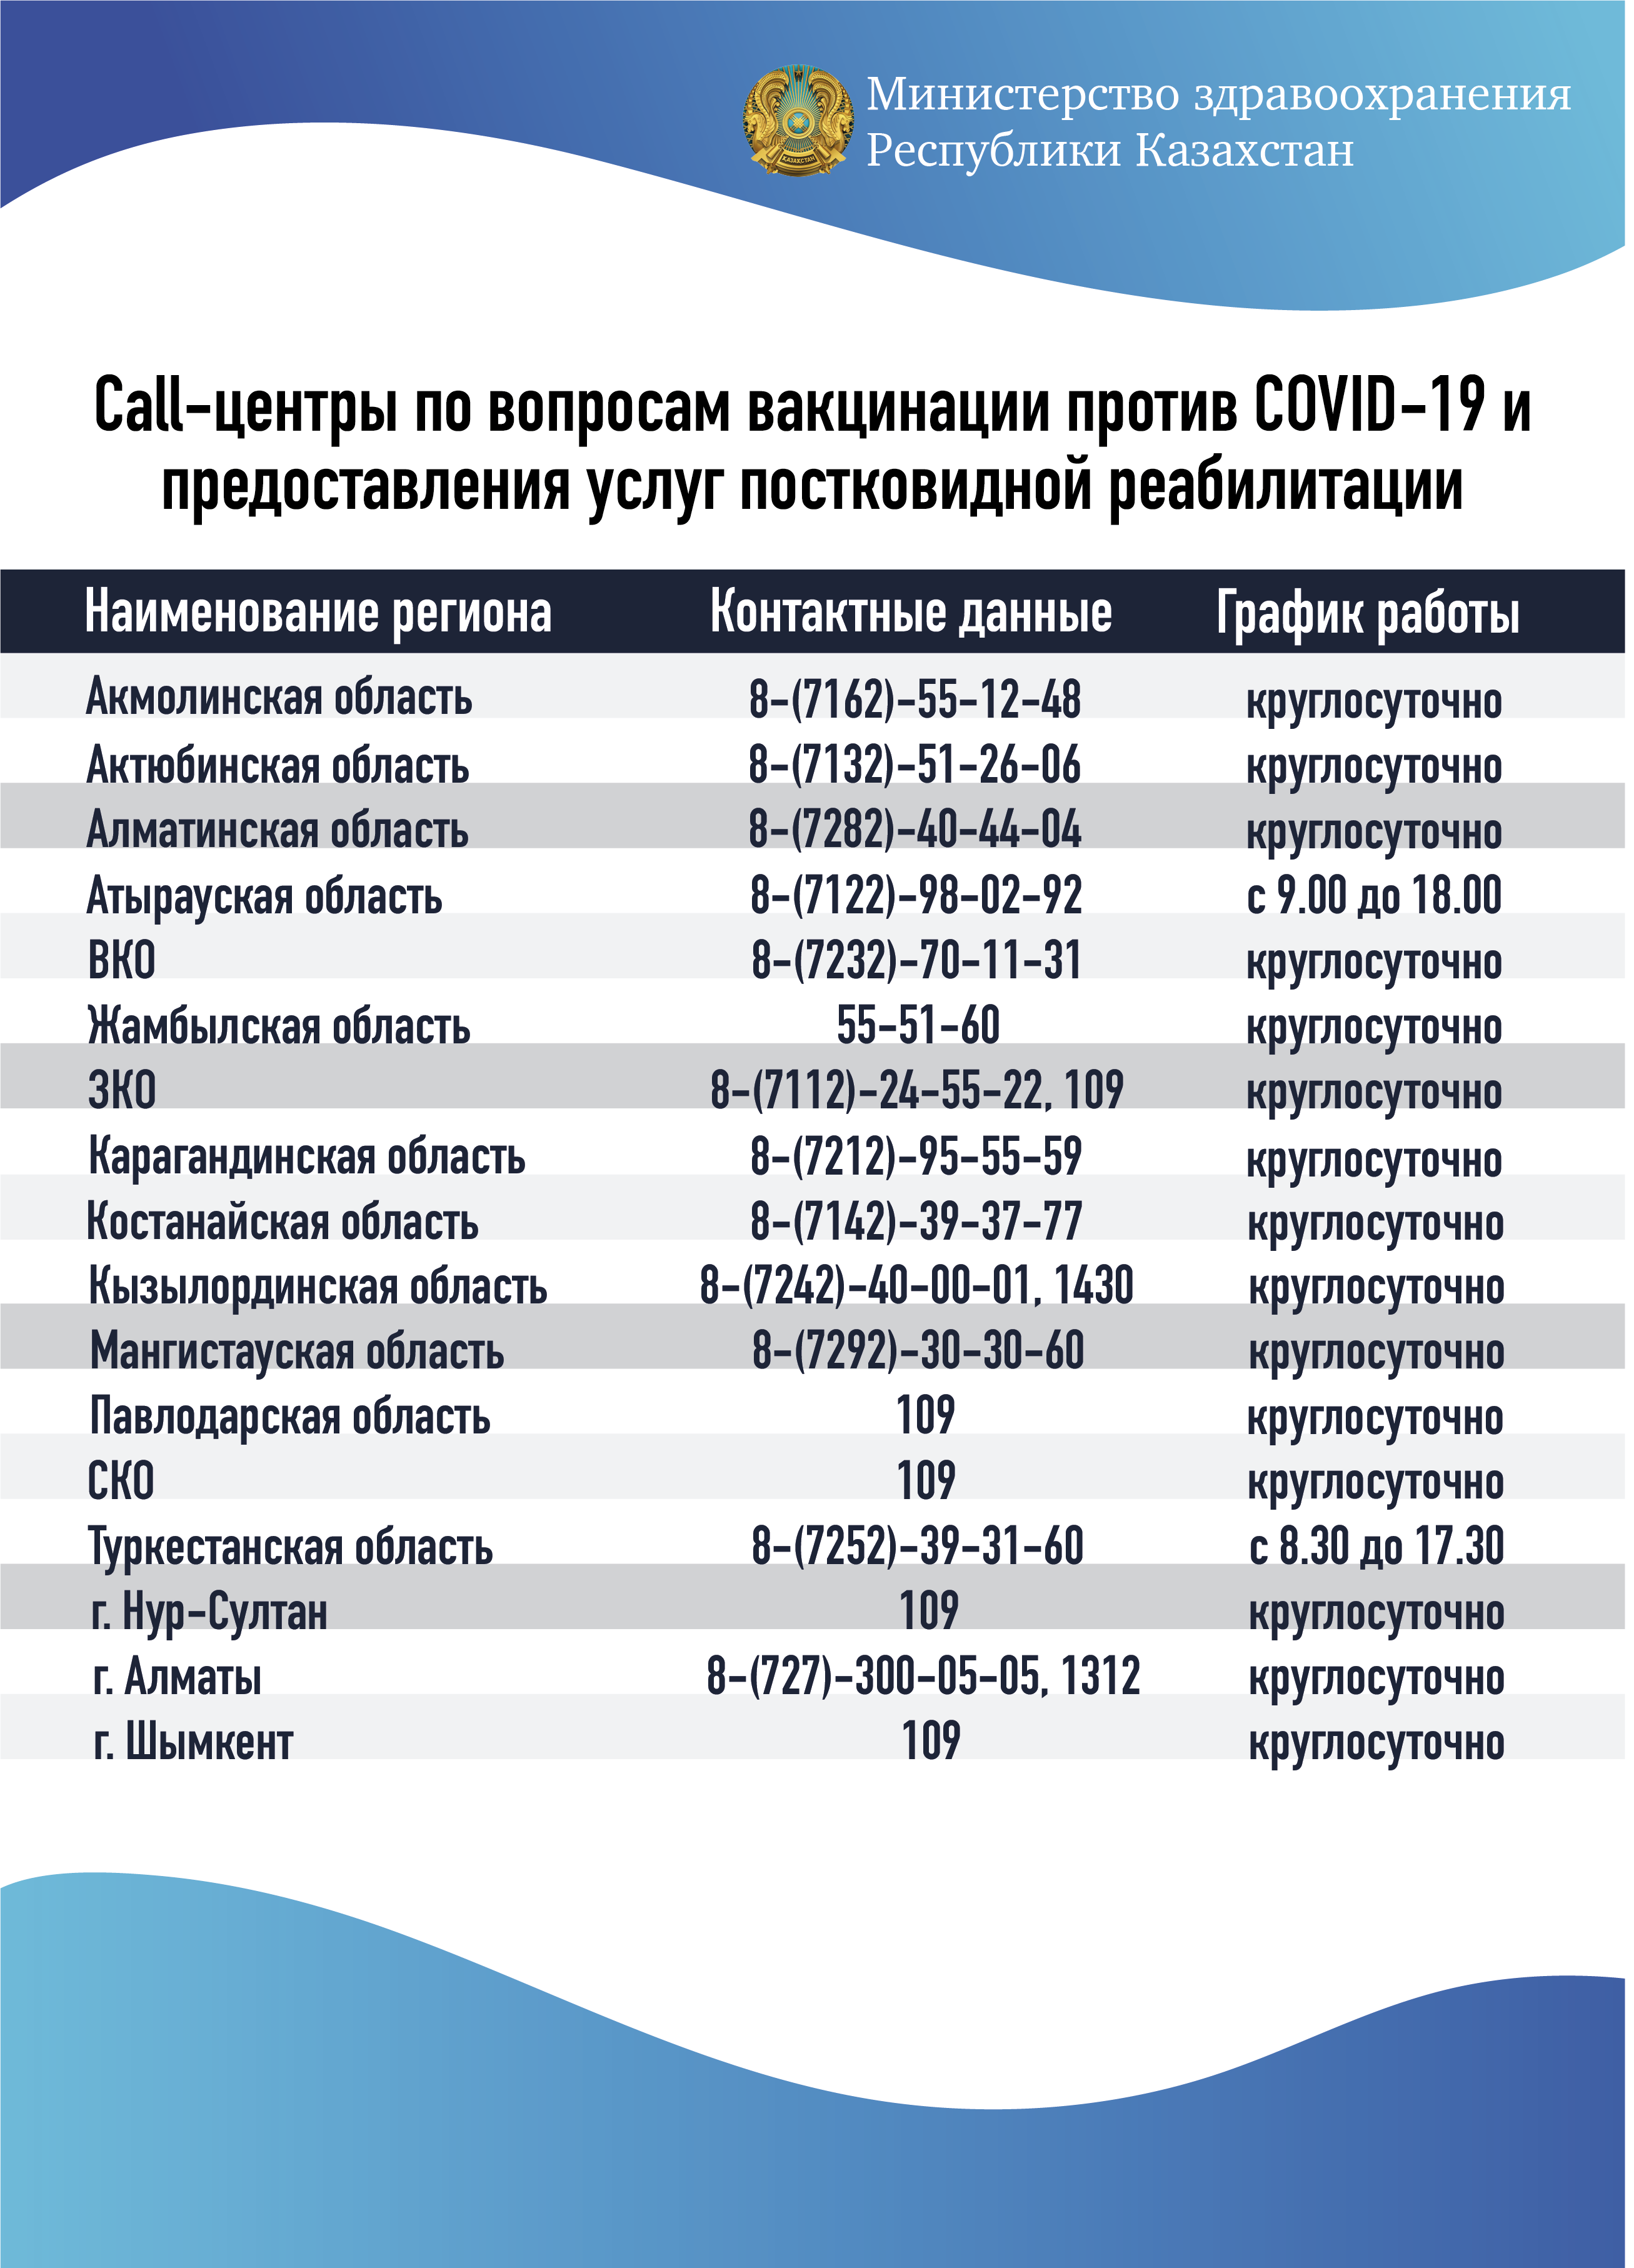 Call-центры по вопросам вакцинации против COVID-19 и предоставления услуг постковидной реабилитации